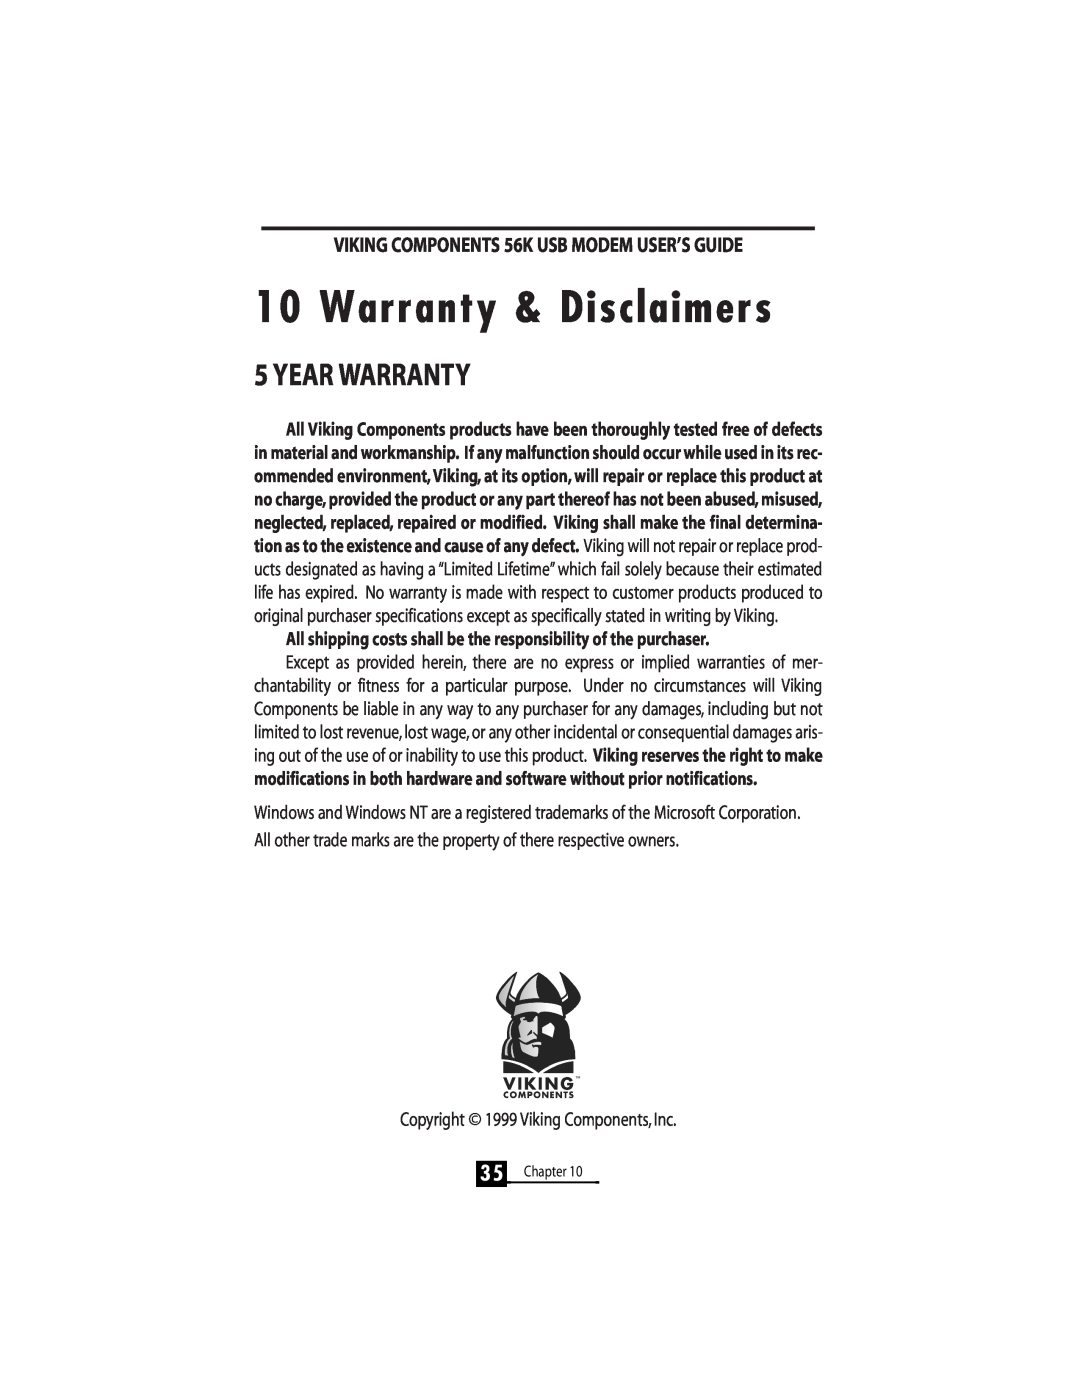 Viking InterWorks 56K manual Warranty & Disclaimers, Year Warranty, Copyright 1999 Viking Components, Inc 